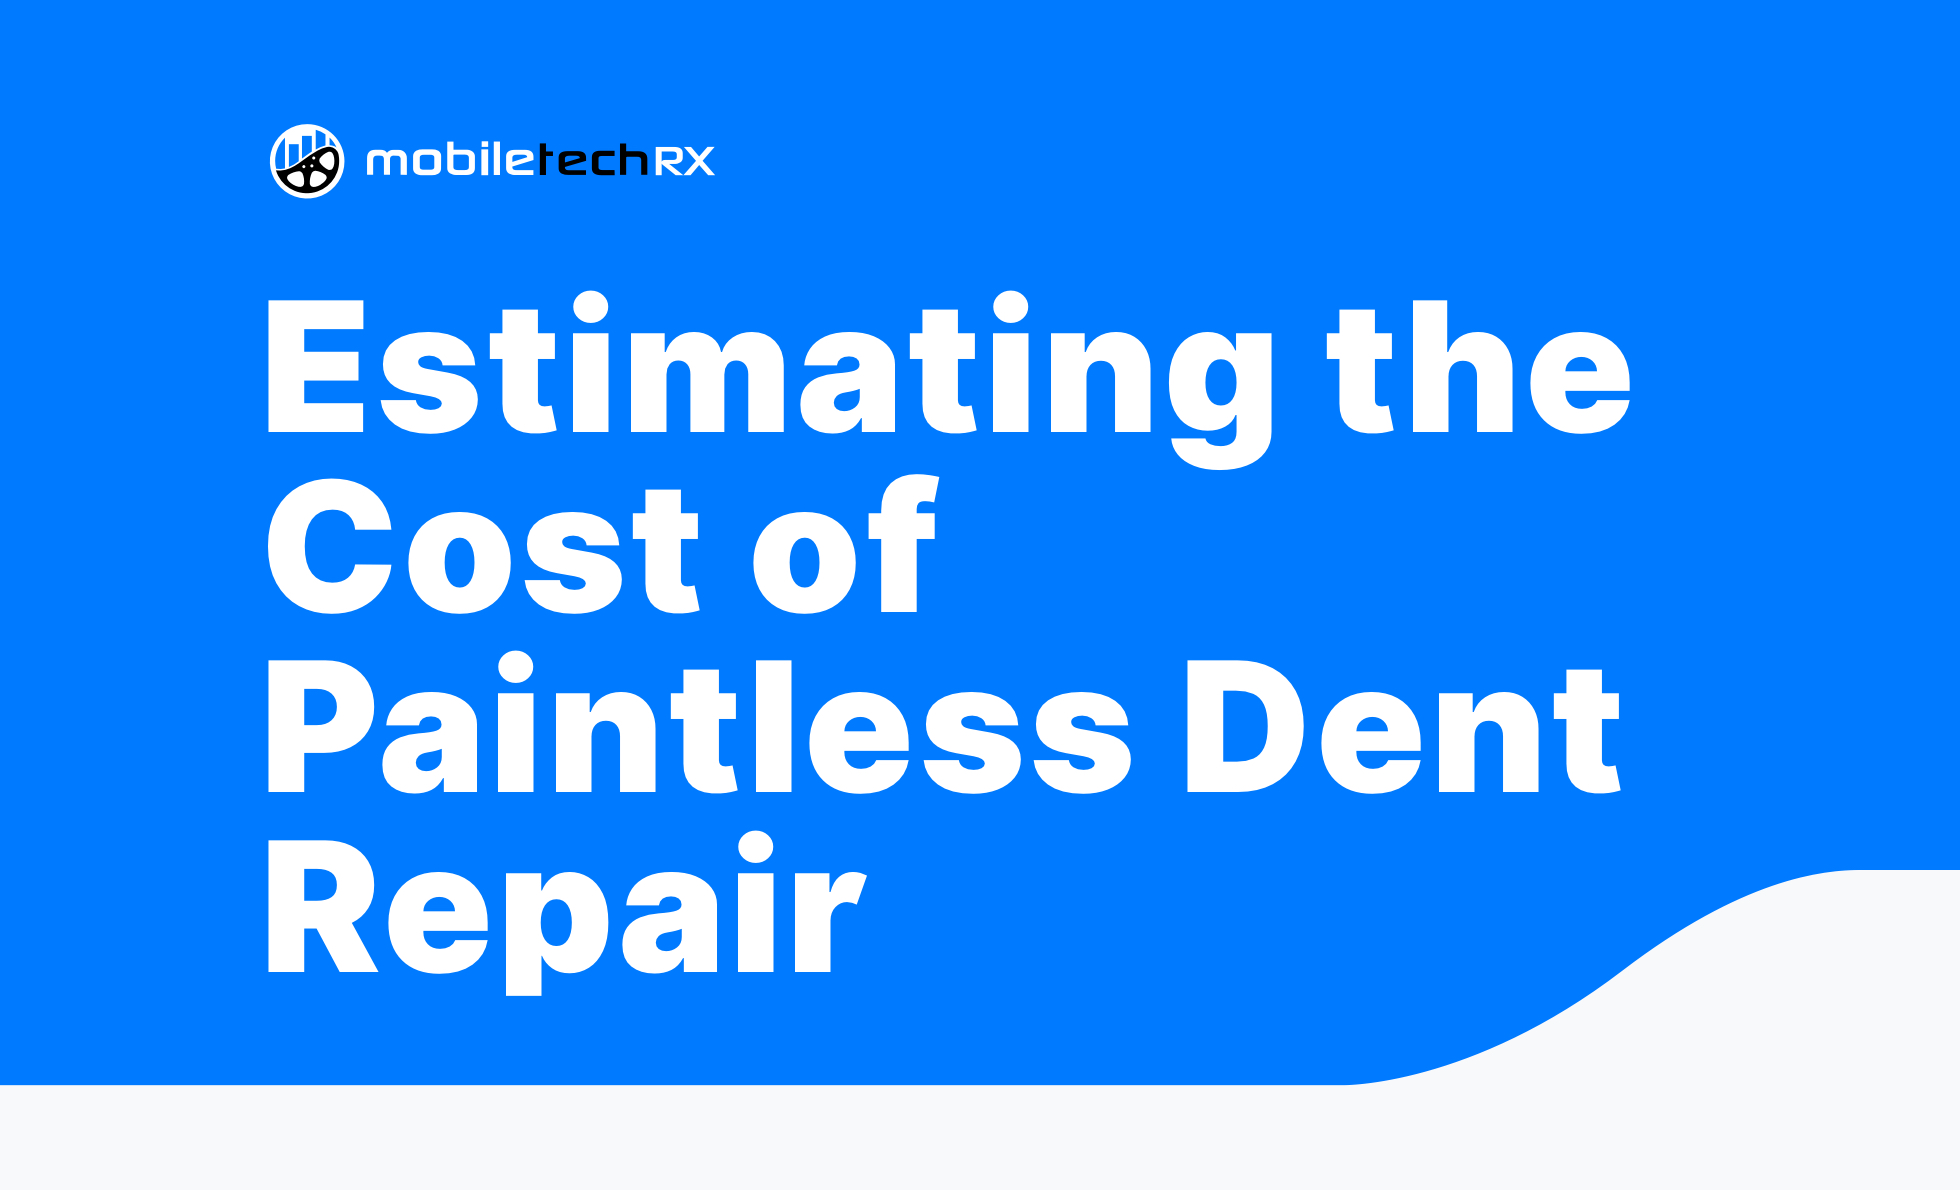 Paintless Dent Repair Pricing Guide Learn More thumbnail